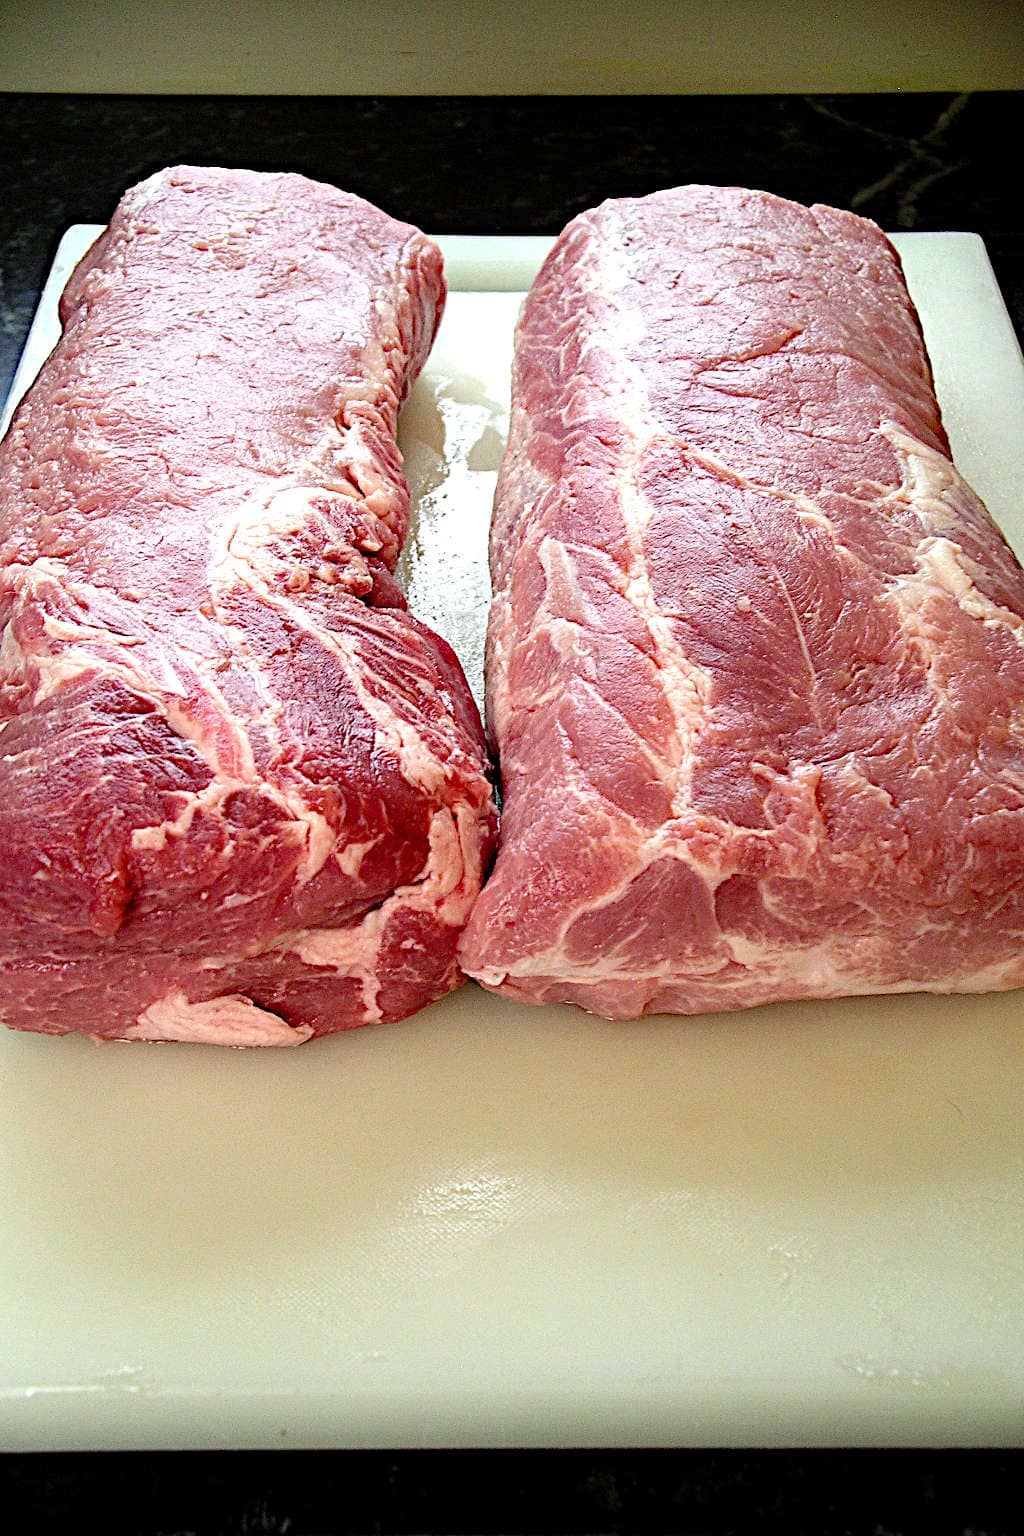 pork sirloin end vs. the loin end